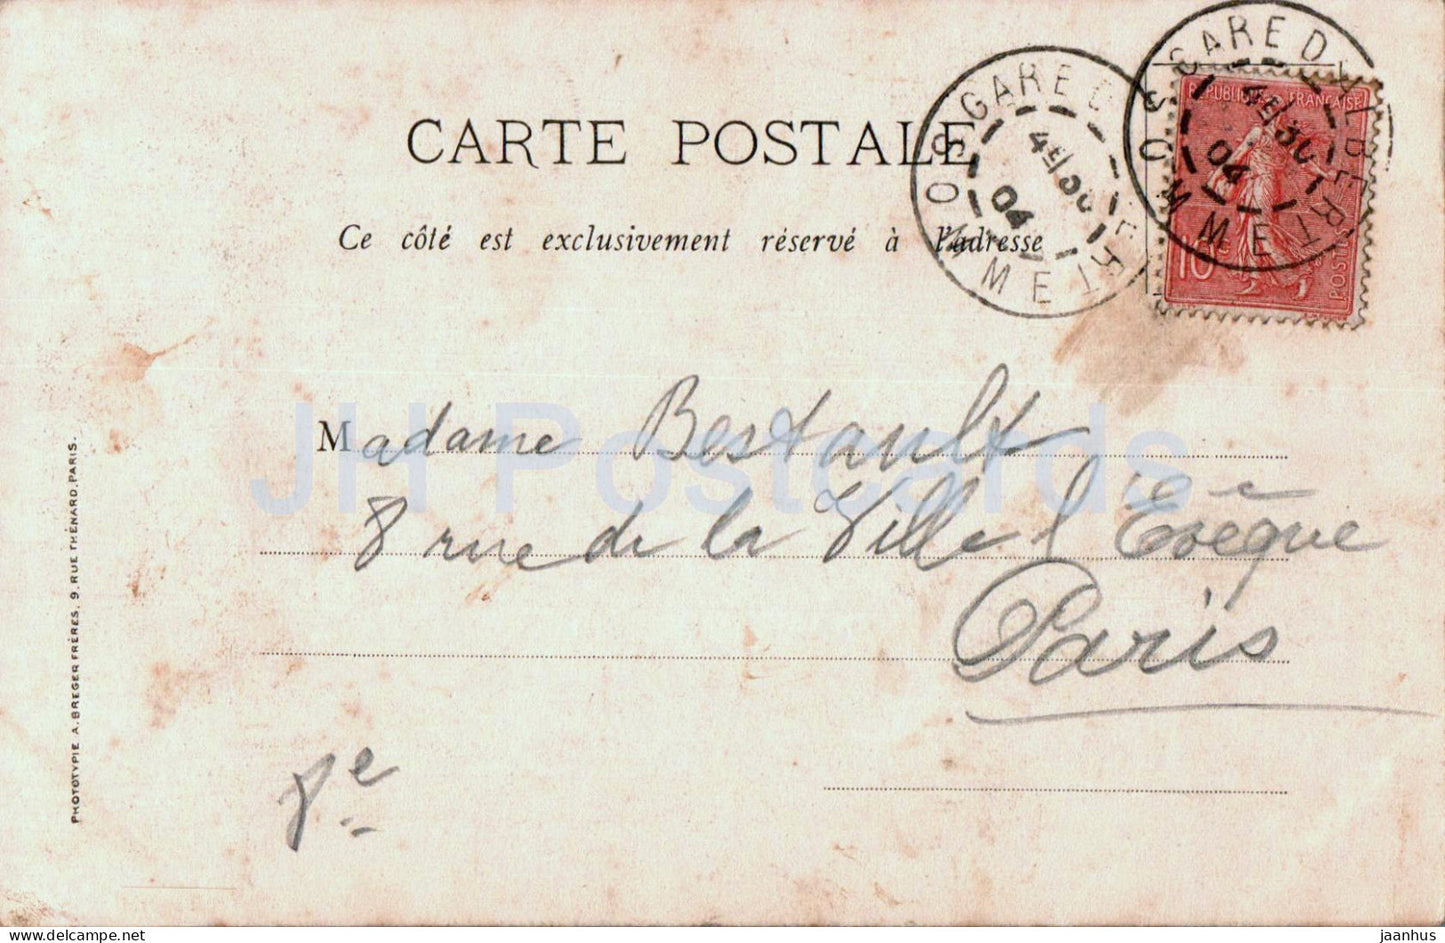 Notre Dame de Brebieres - Albert - Somme - Le Maitre Autel - cathedral - old postcard - 1904 - France - used